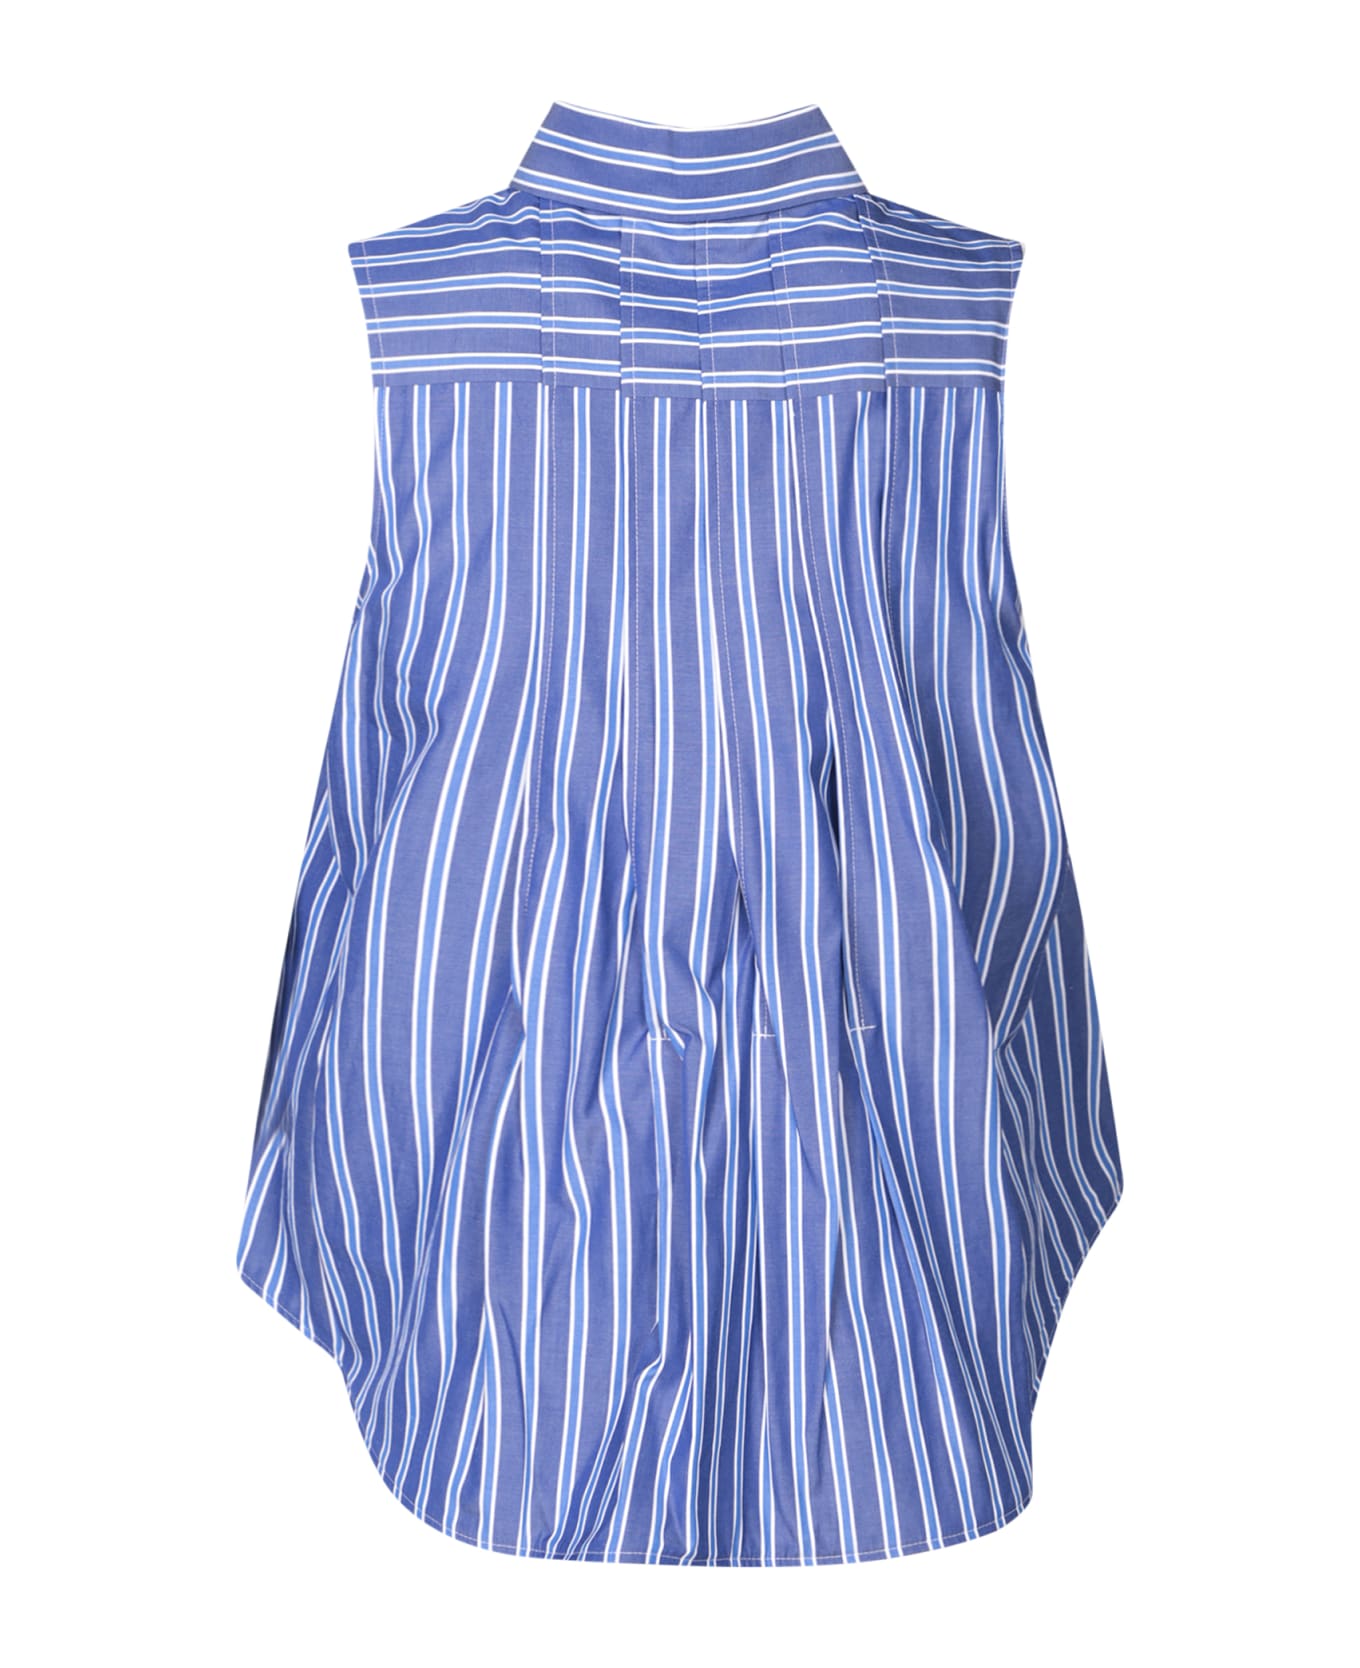 Sacai Sleeveless Shirt In White And Light Blue Stripes - Multi